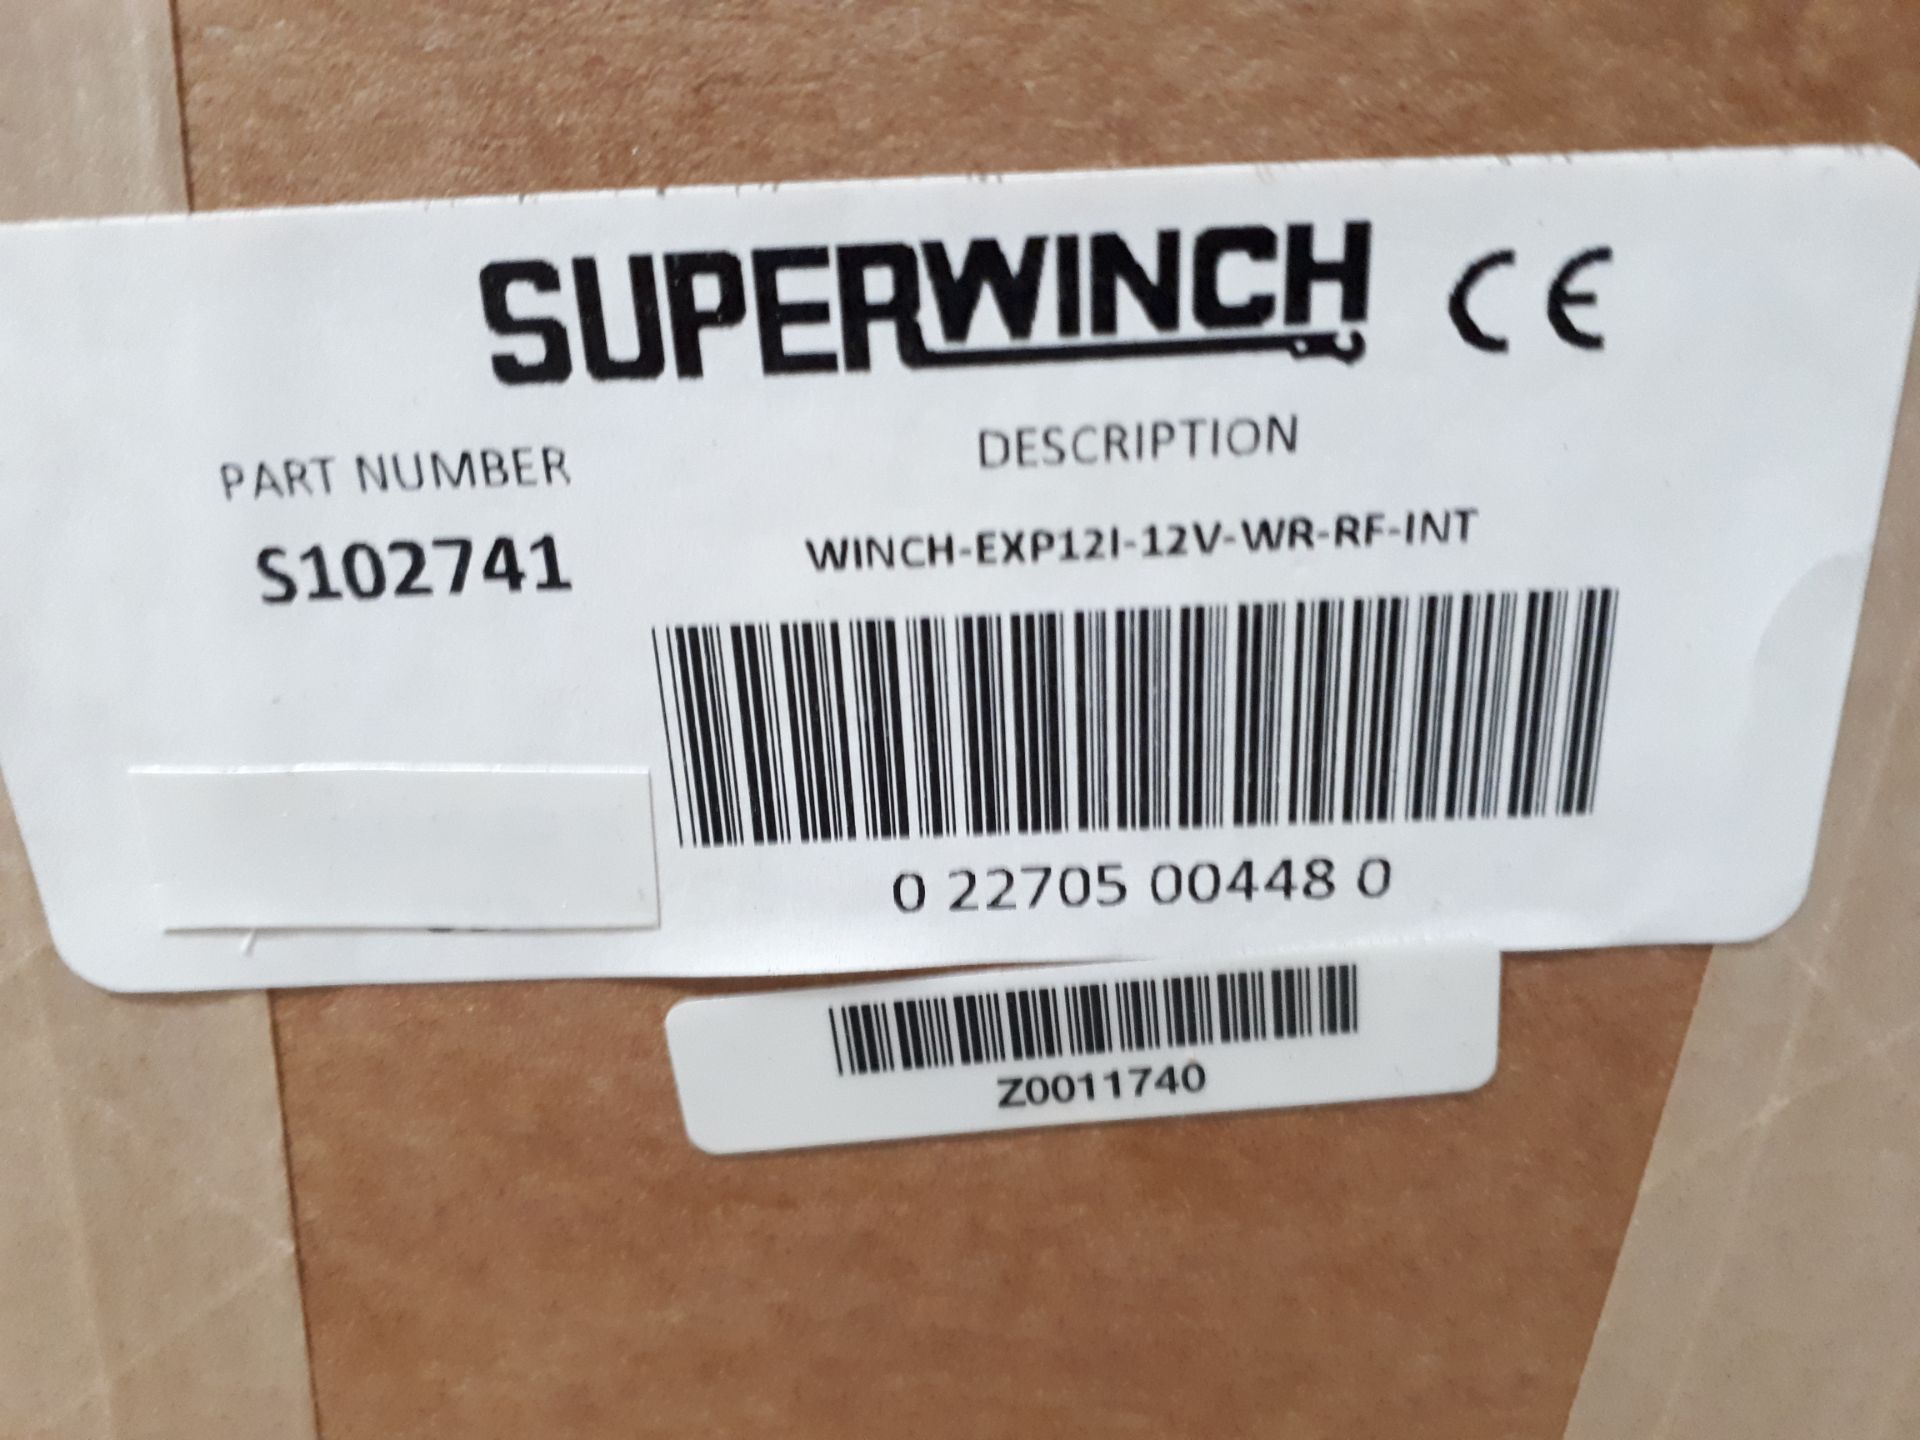 Superwinch EXPI2I-12v-WR-RF-INT winch, Part no. S102741 - Image 2 of 2